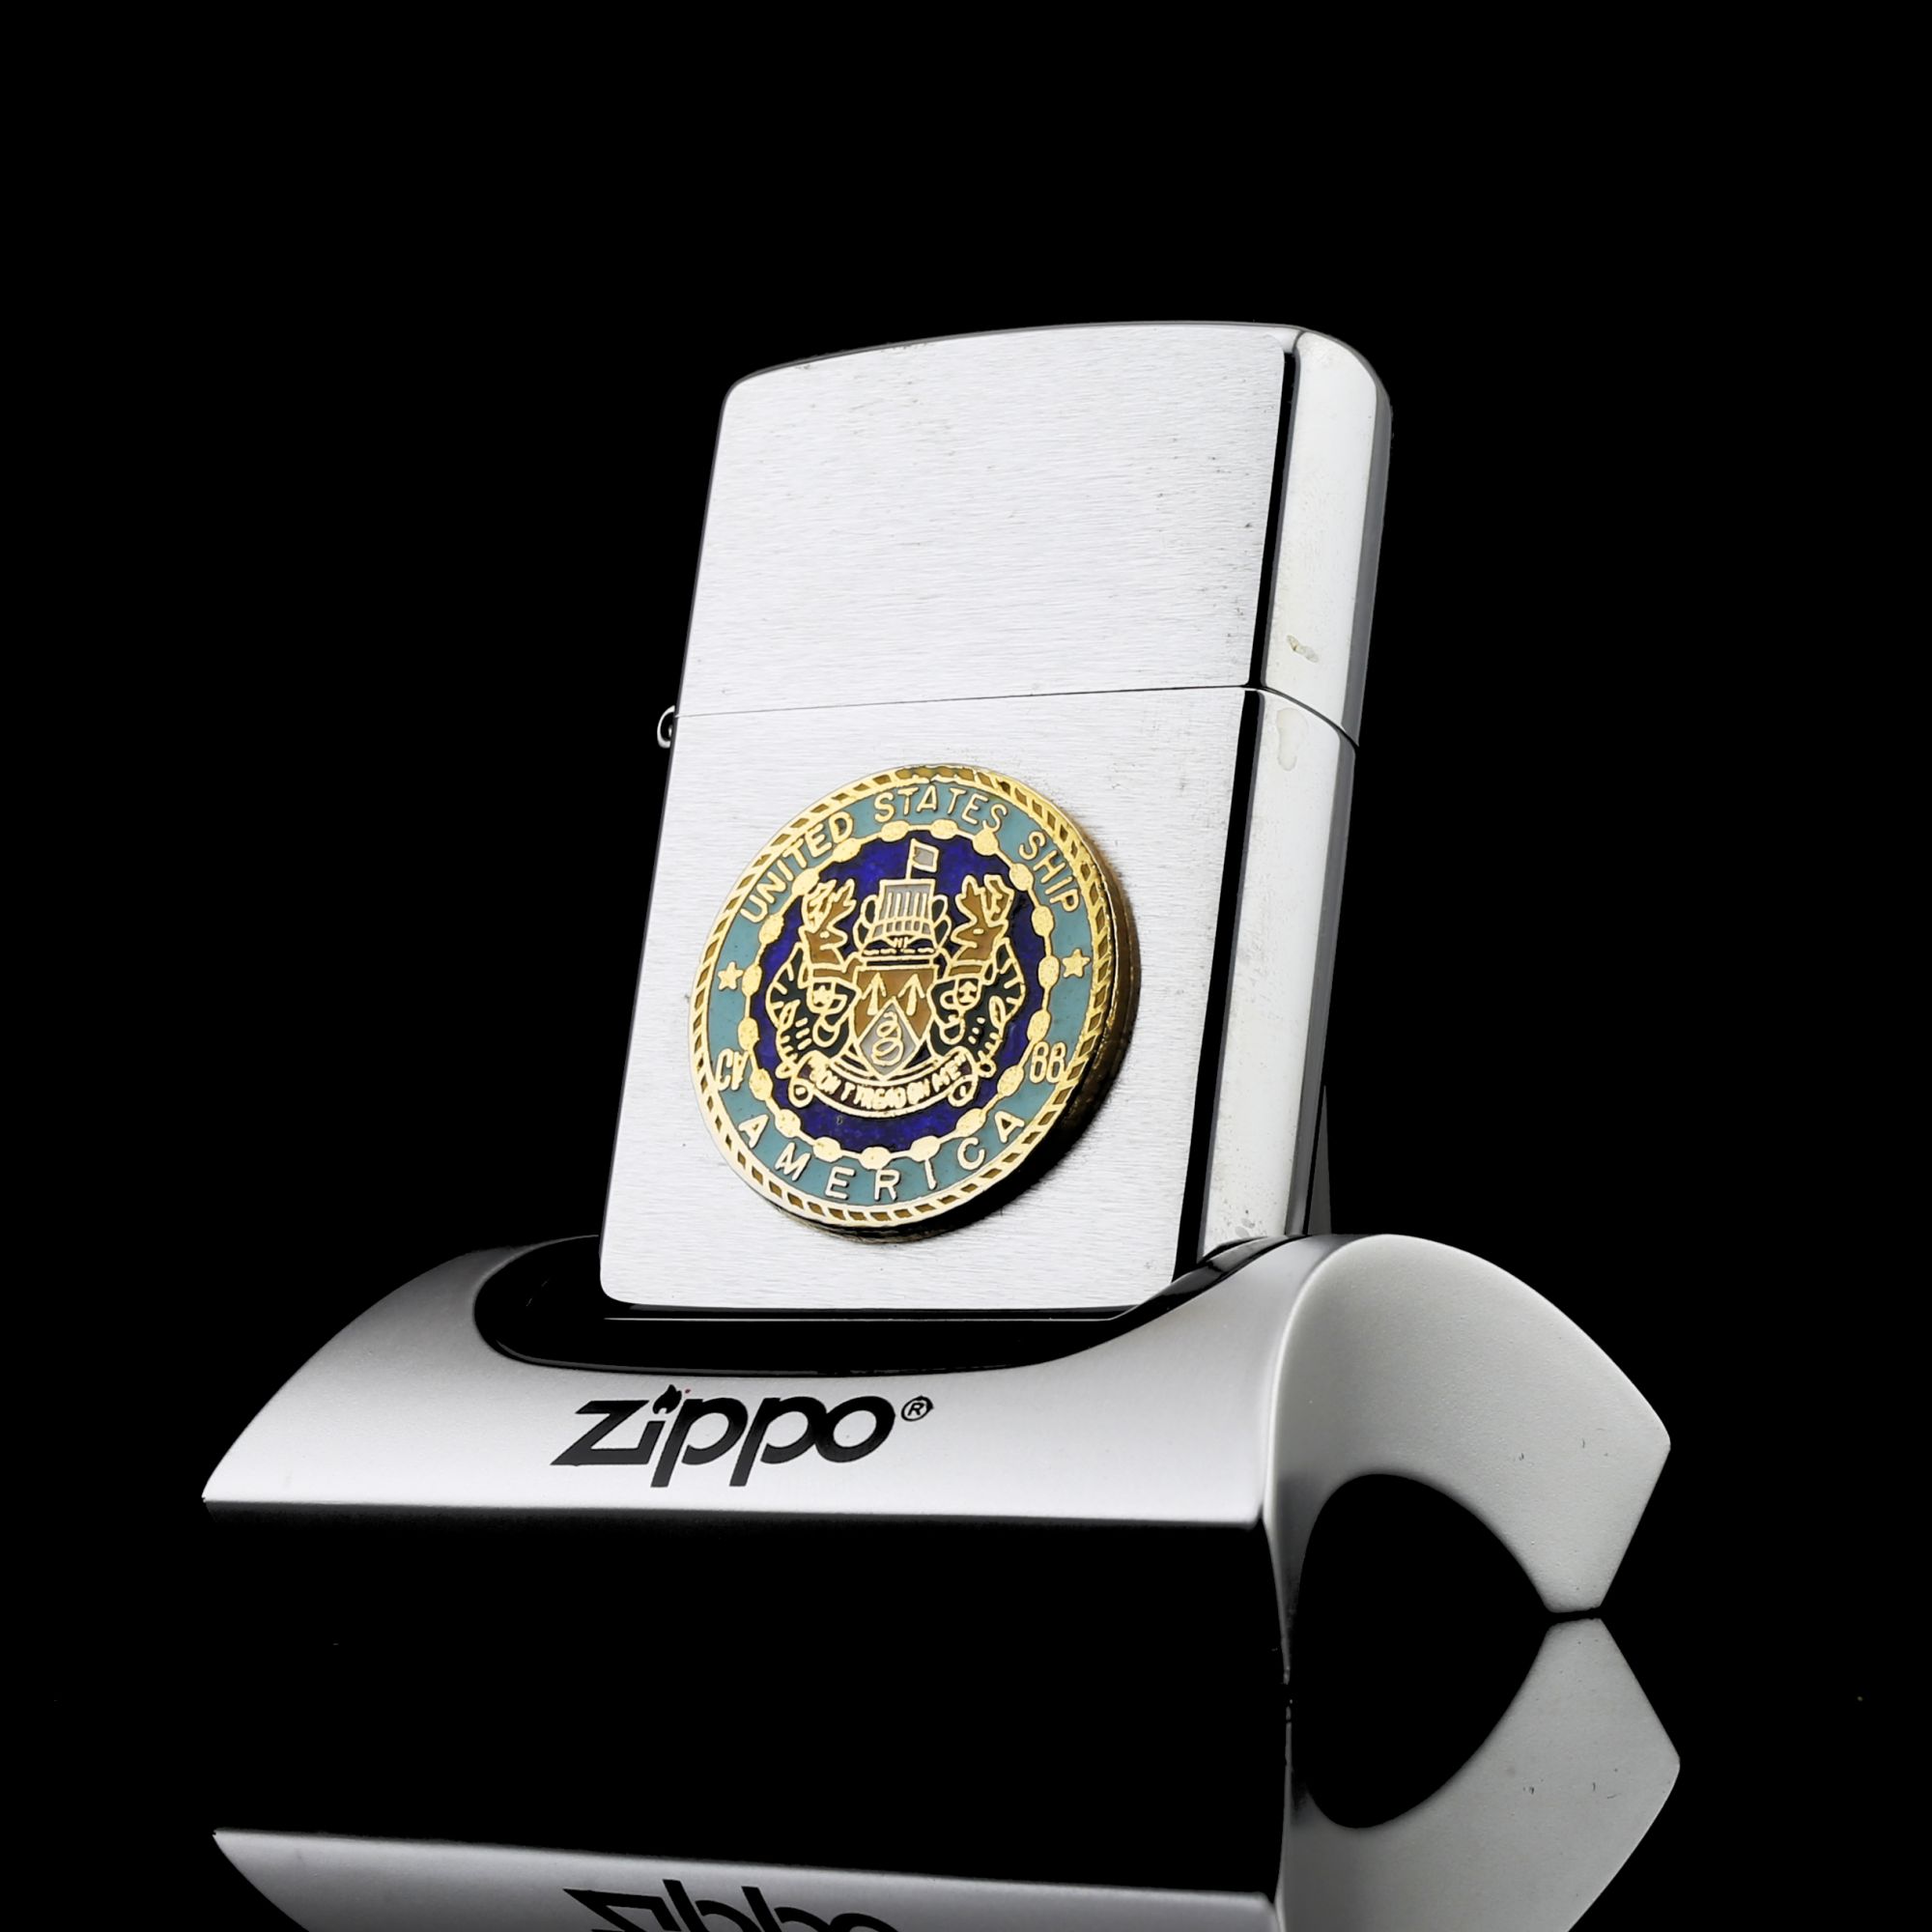 Zippo-UNITED-STATES-SHIP-AMERICA-CV-68-XVL-L-2000-don-gian-zippo-chien-tranh-gia-tri-dat-tien-quan-1